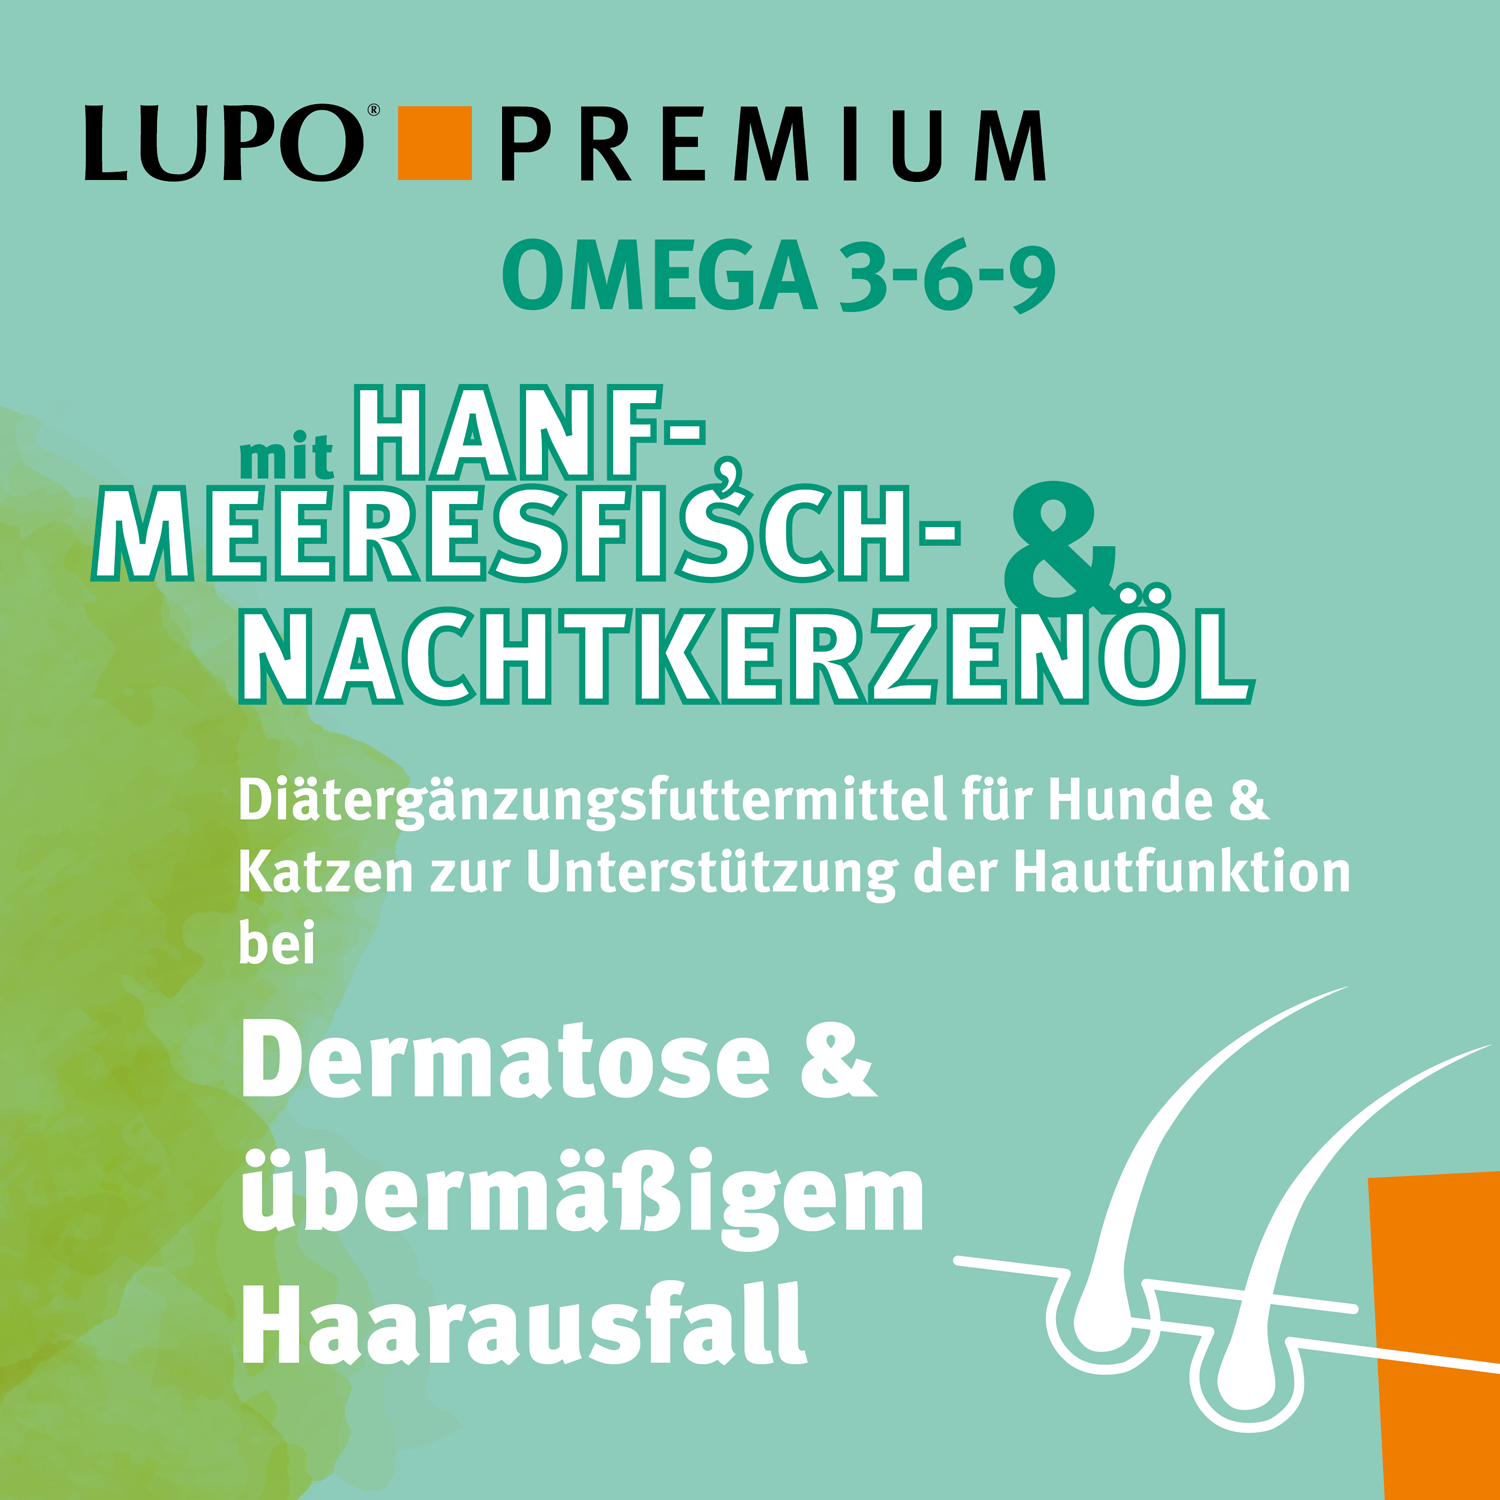 LUPO OMEGA 369 Premium 500 ml